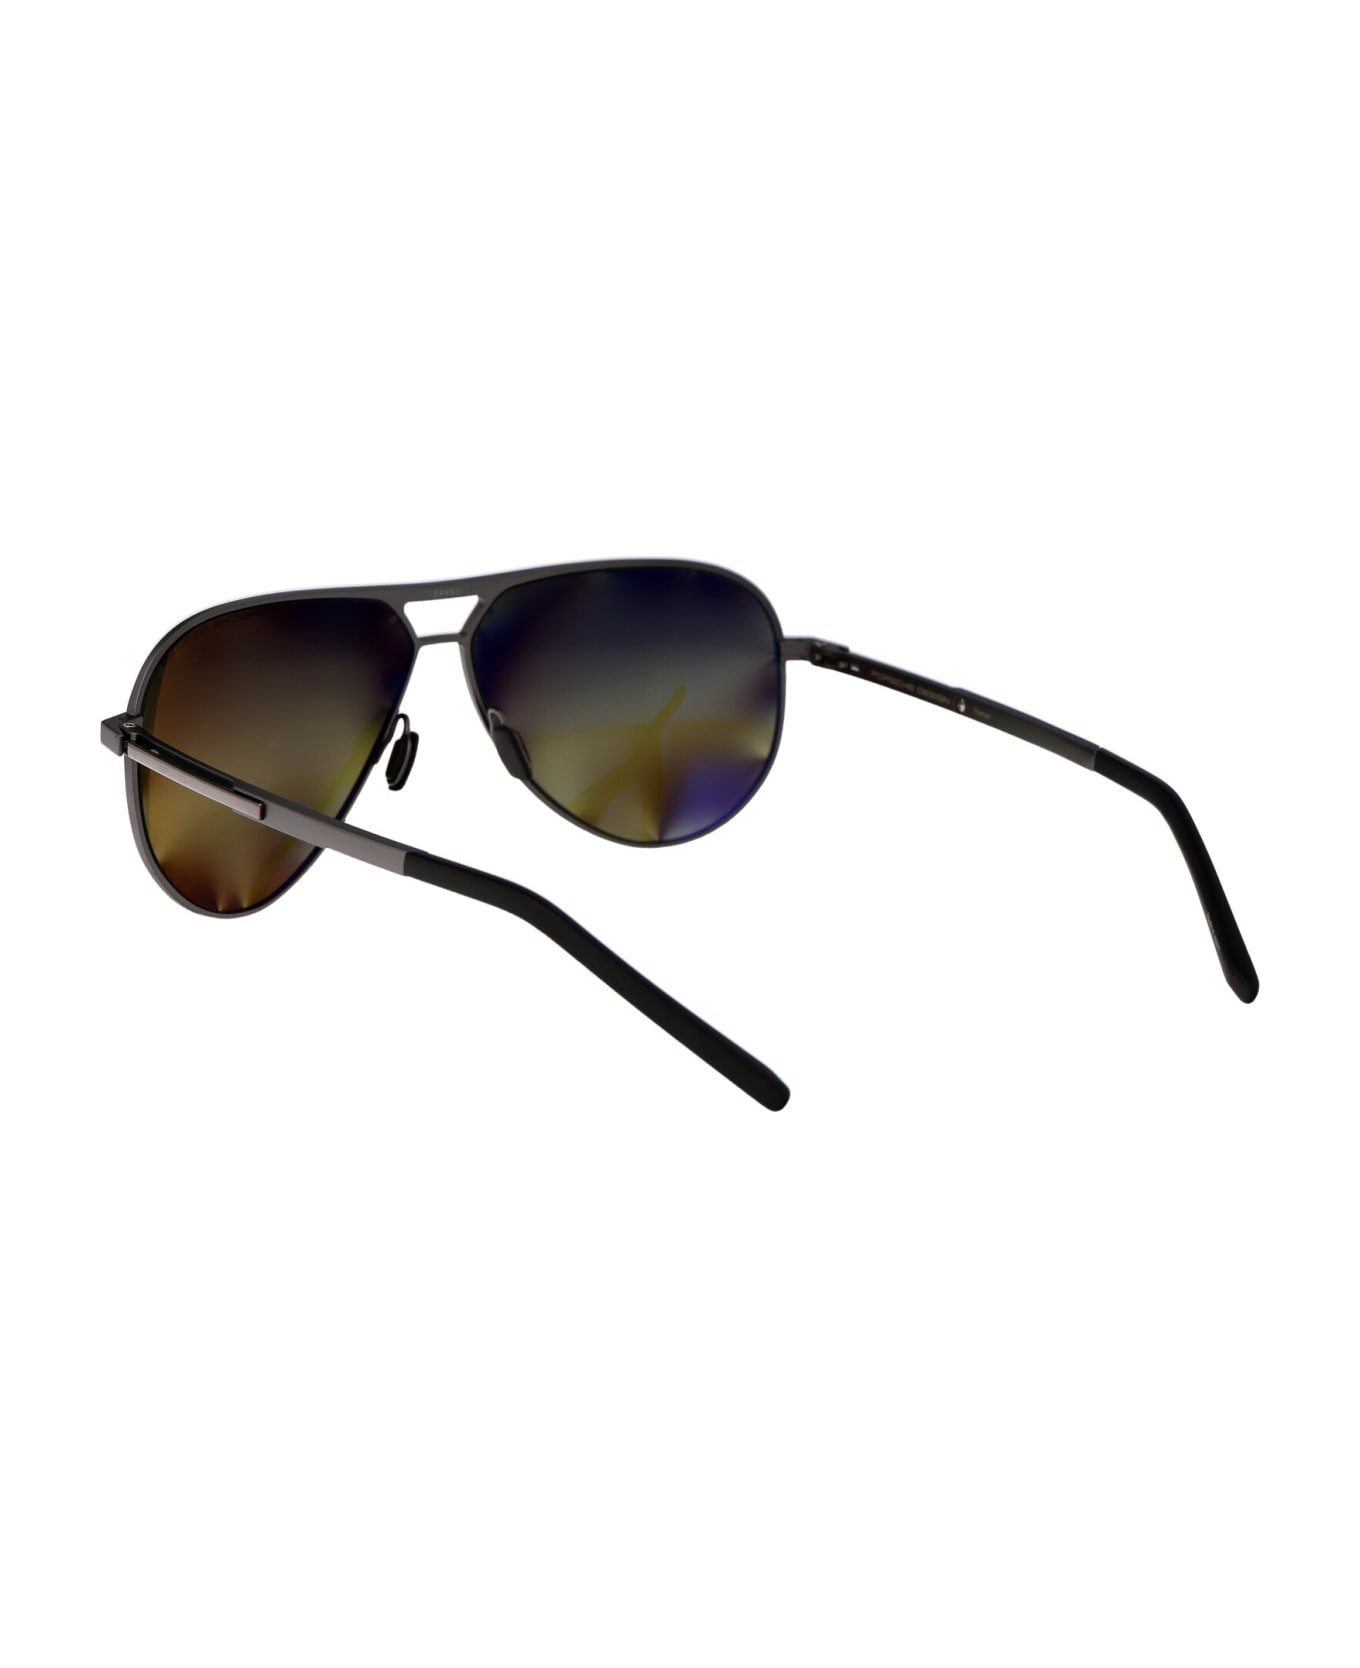 Porsche Design P8942 Sunglasses - B417 GREY BLACK